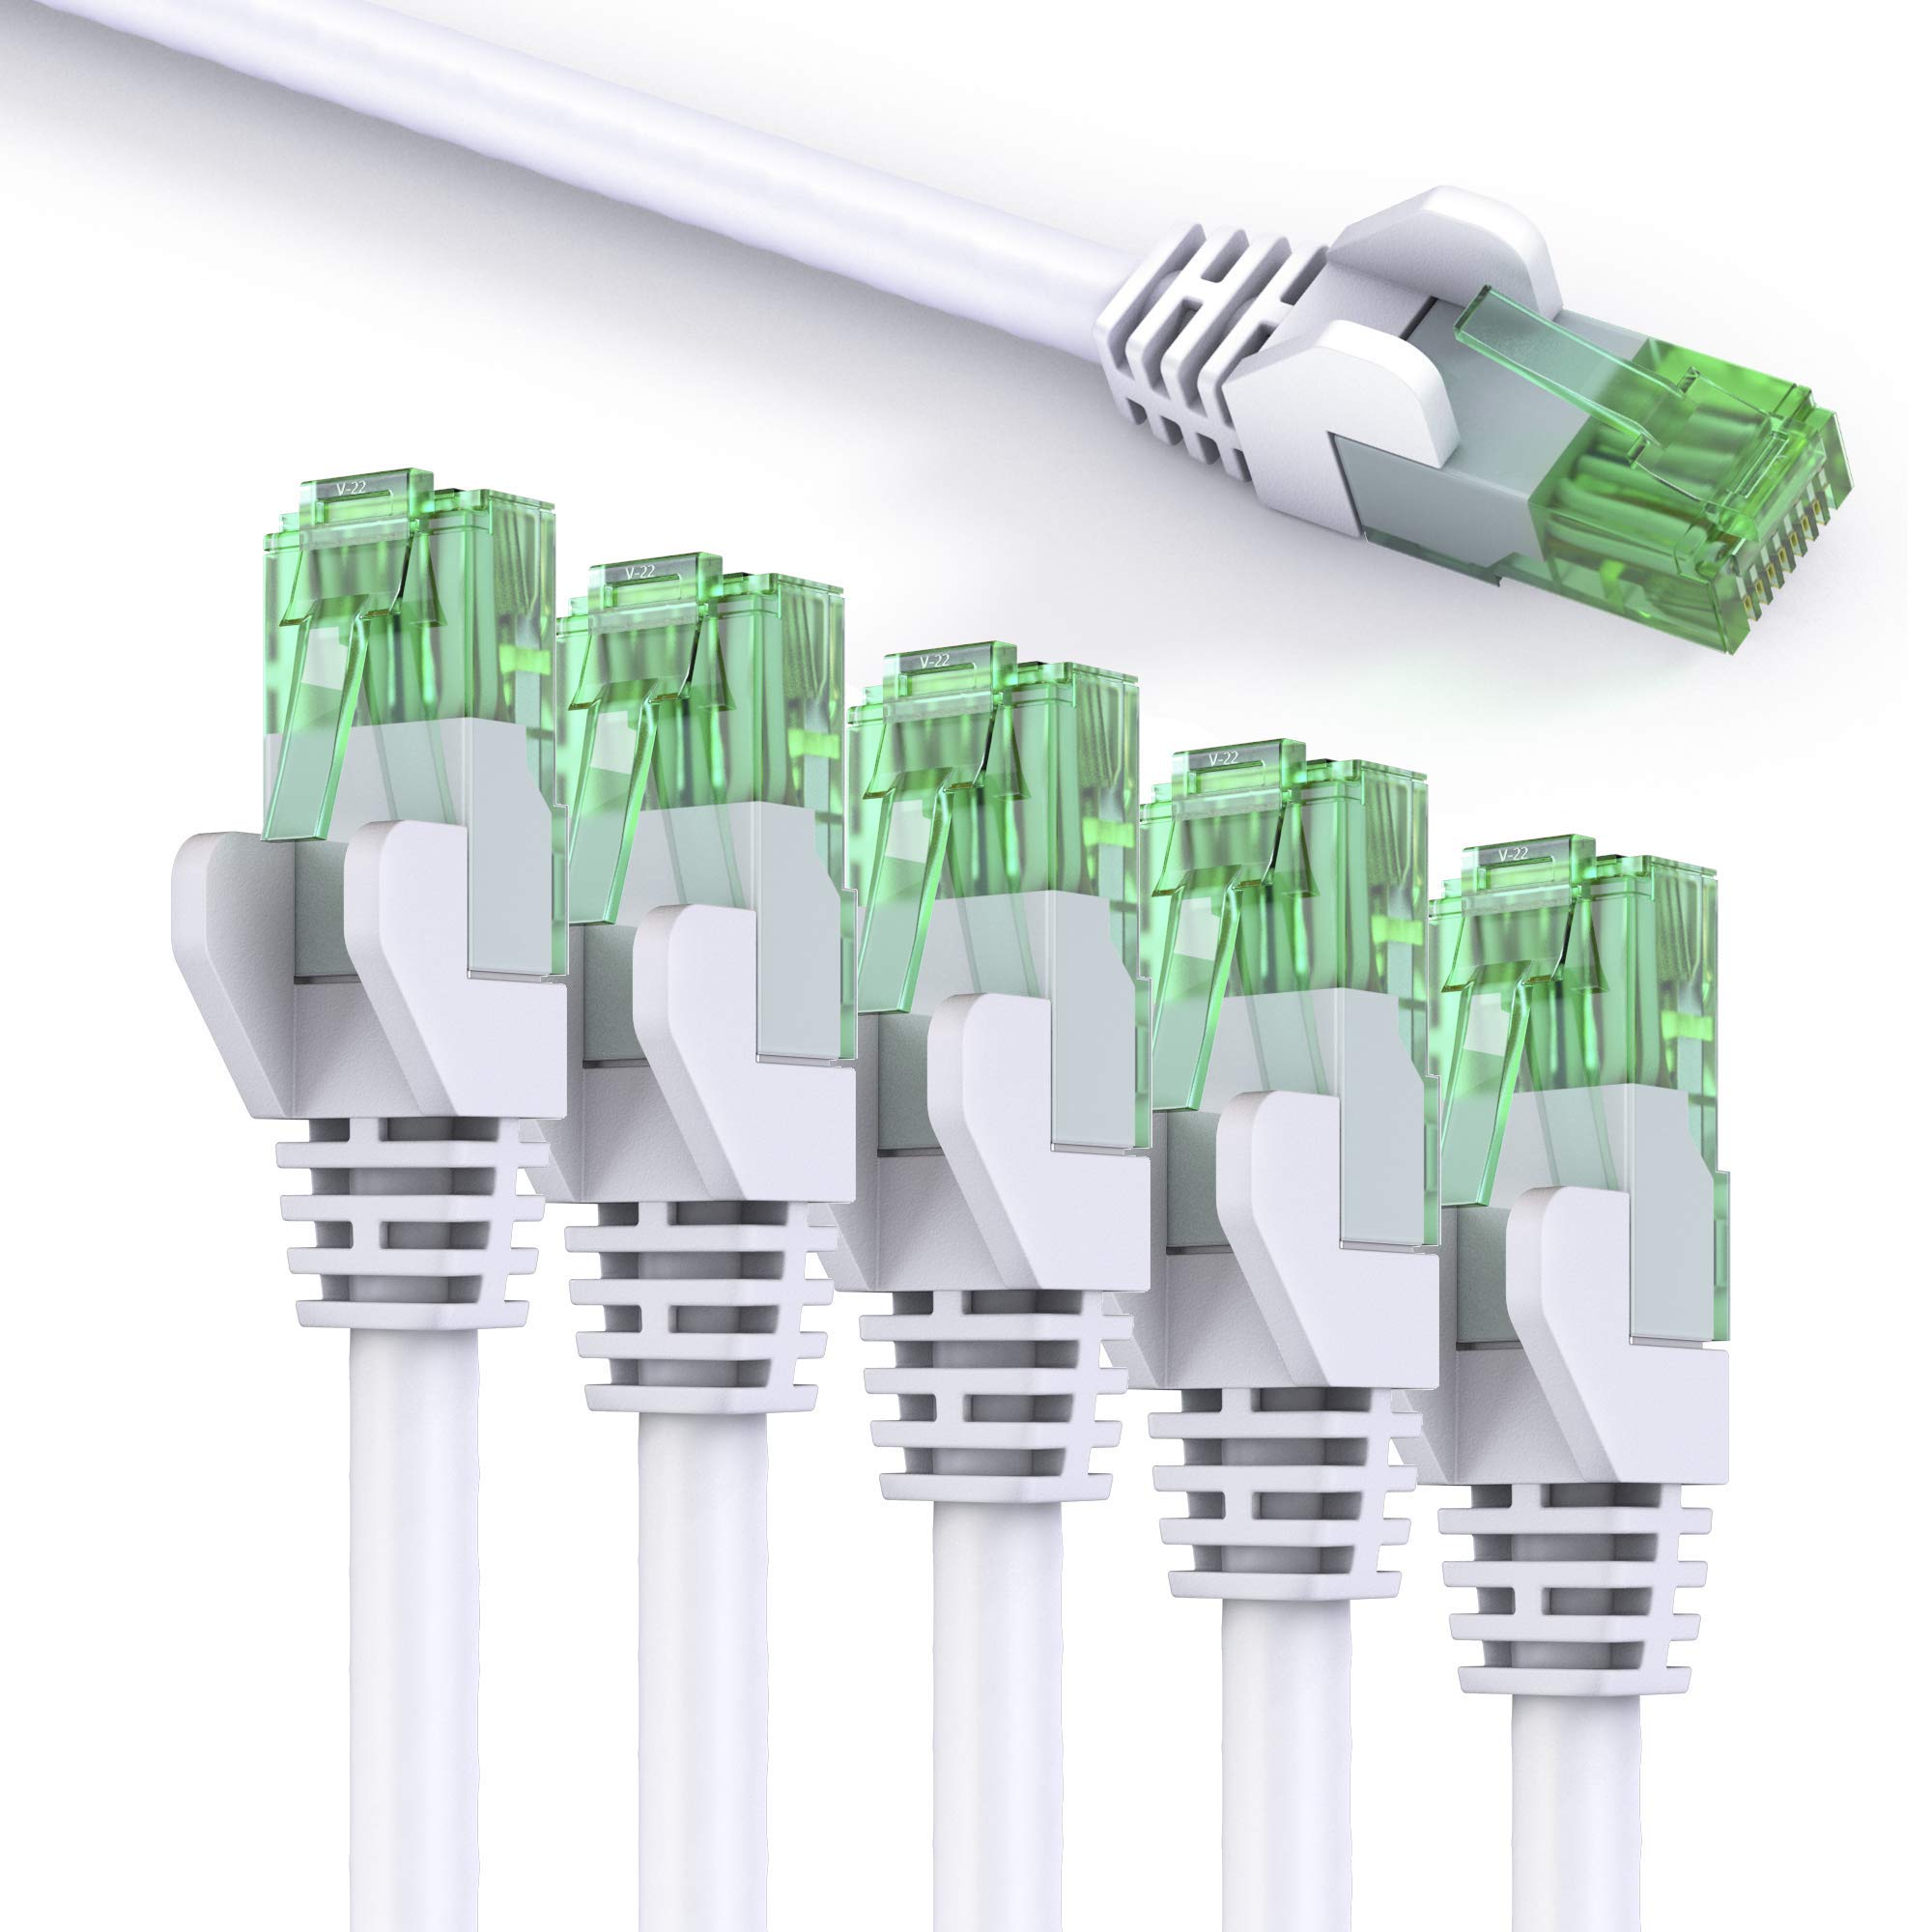 conecto CC50408 Patchkabel CAT.5e (UTP) Netzwerkkabel Ethernetkabel LAN Kabel Cat5 RJ45 Stecker 30m weiß (5er Set + 1x gratis!)